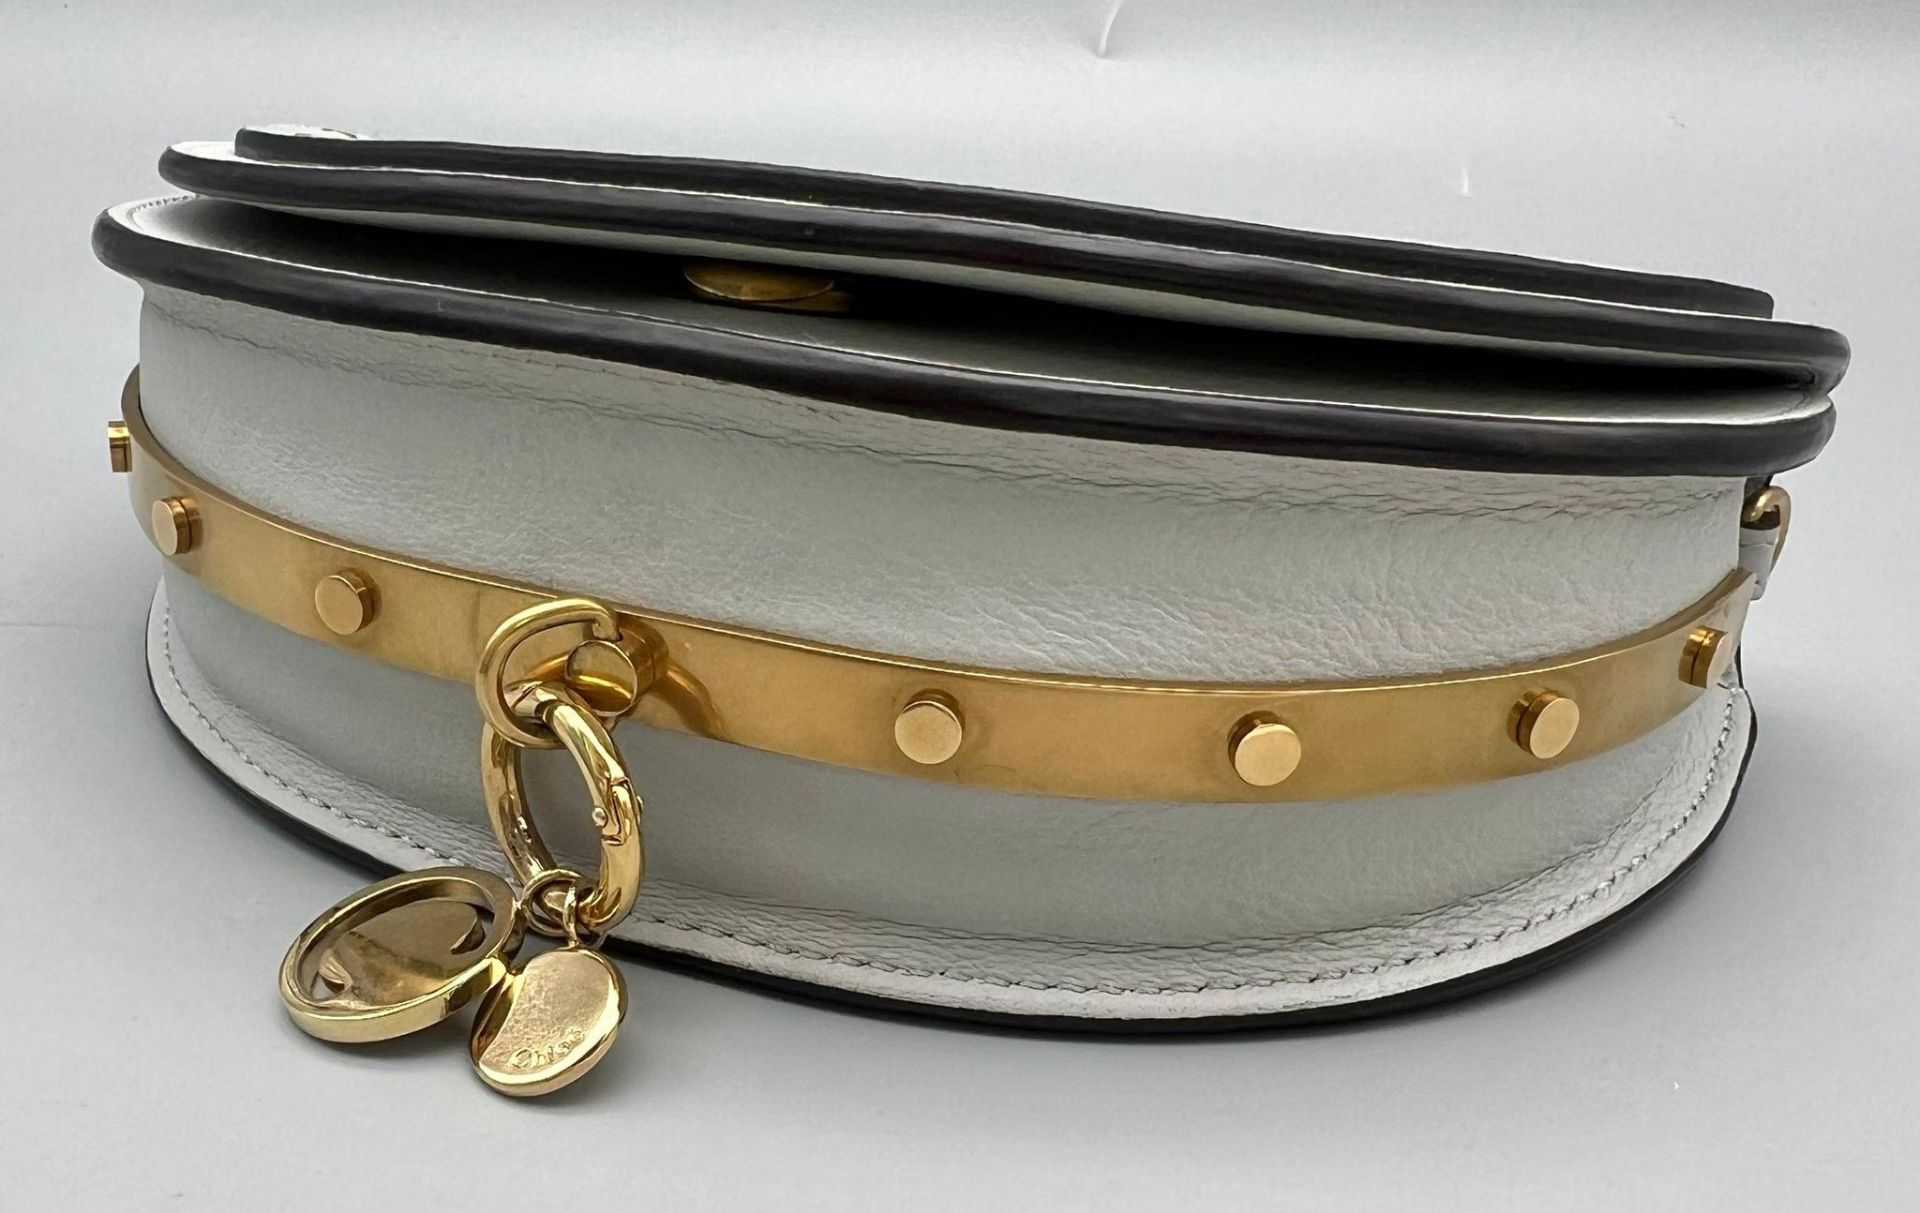 A Very Popular Chloe Bracelet Nile Leather Flap Handbag. Grey leather exterior with serious gold- - Bild 2 aus 6